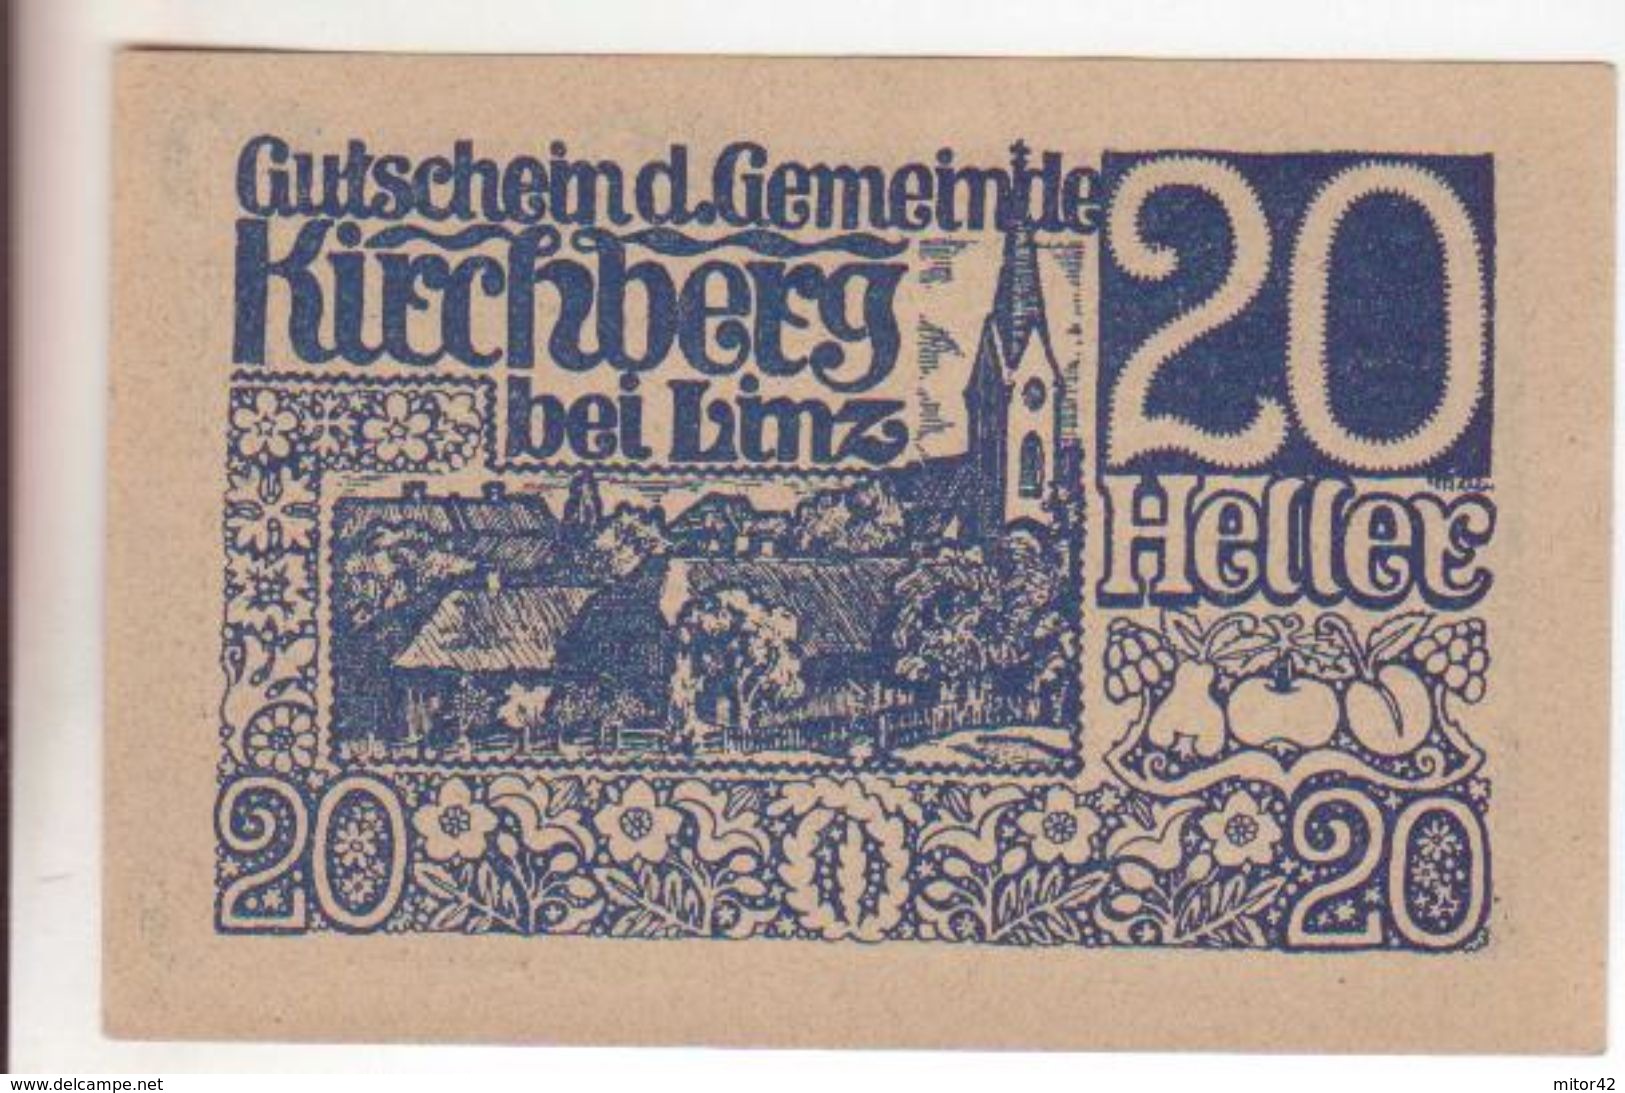 191-Banconote-Carta Moneta Di Emergenza-NOTGELD-Austria-Osterraich-Emergency Money-20 Heller-1920. - Autriche